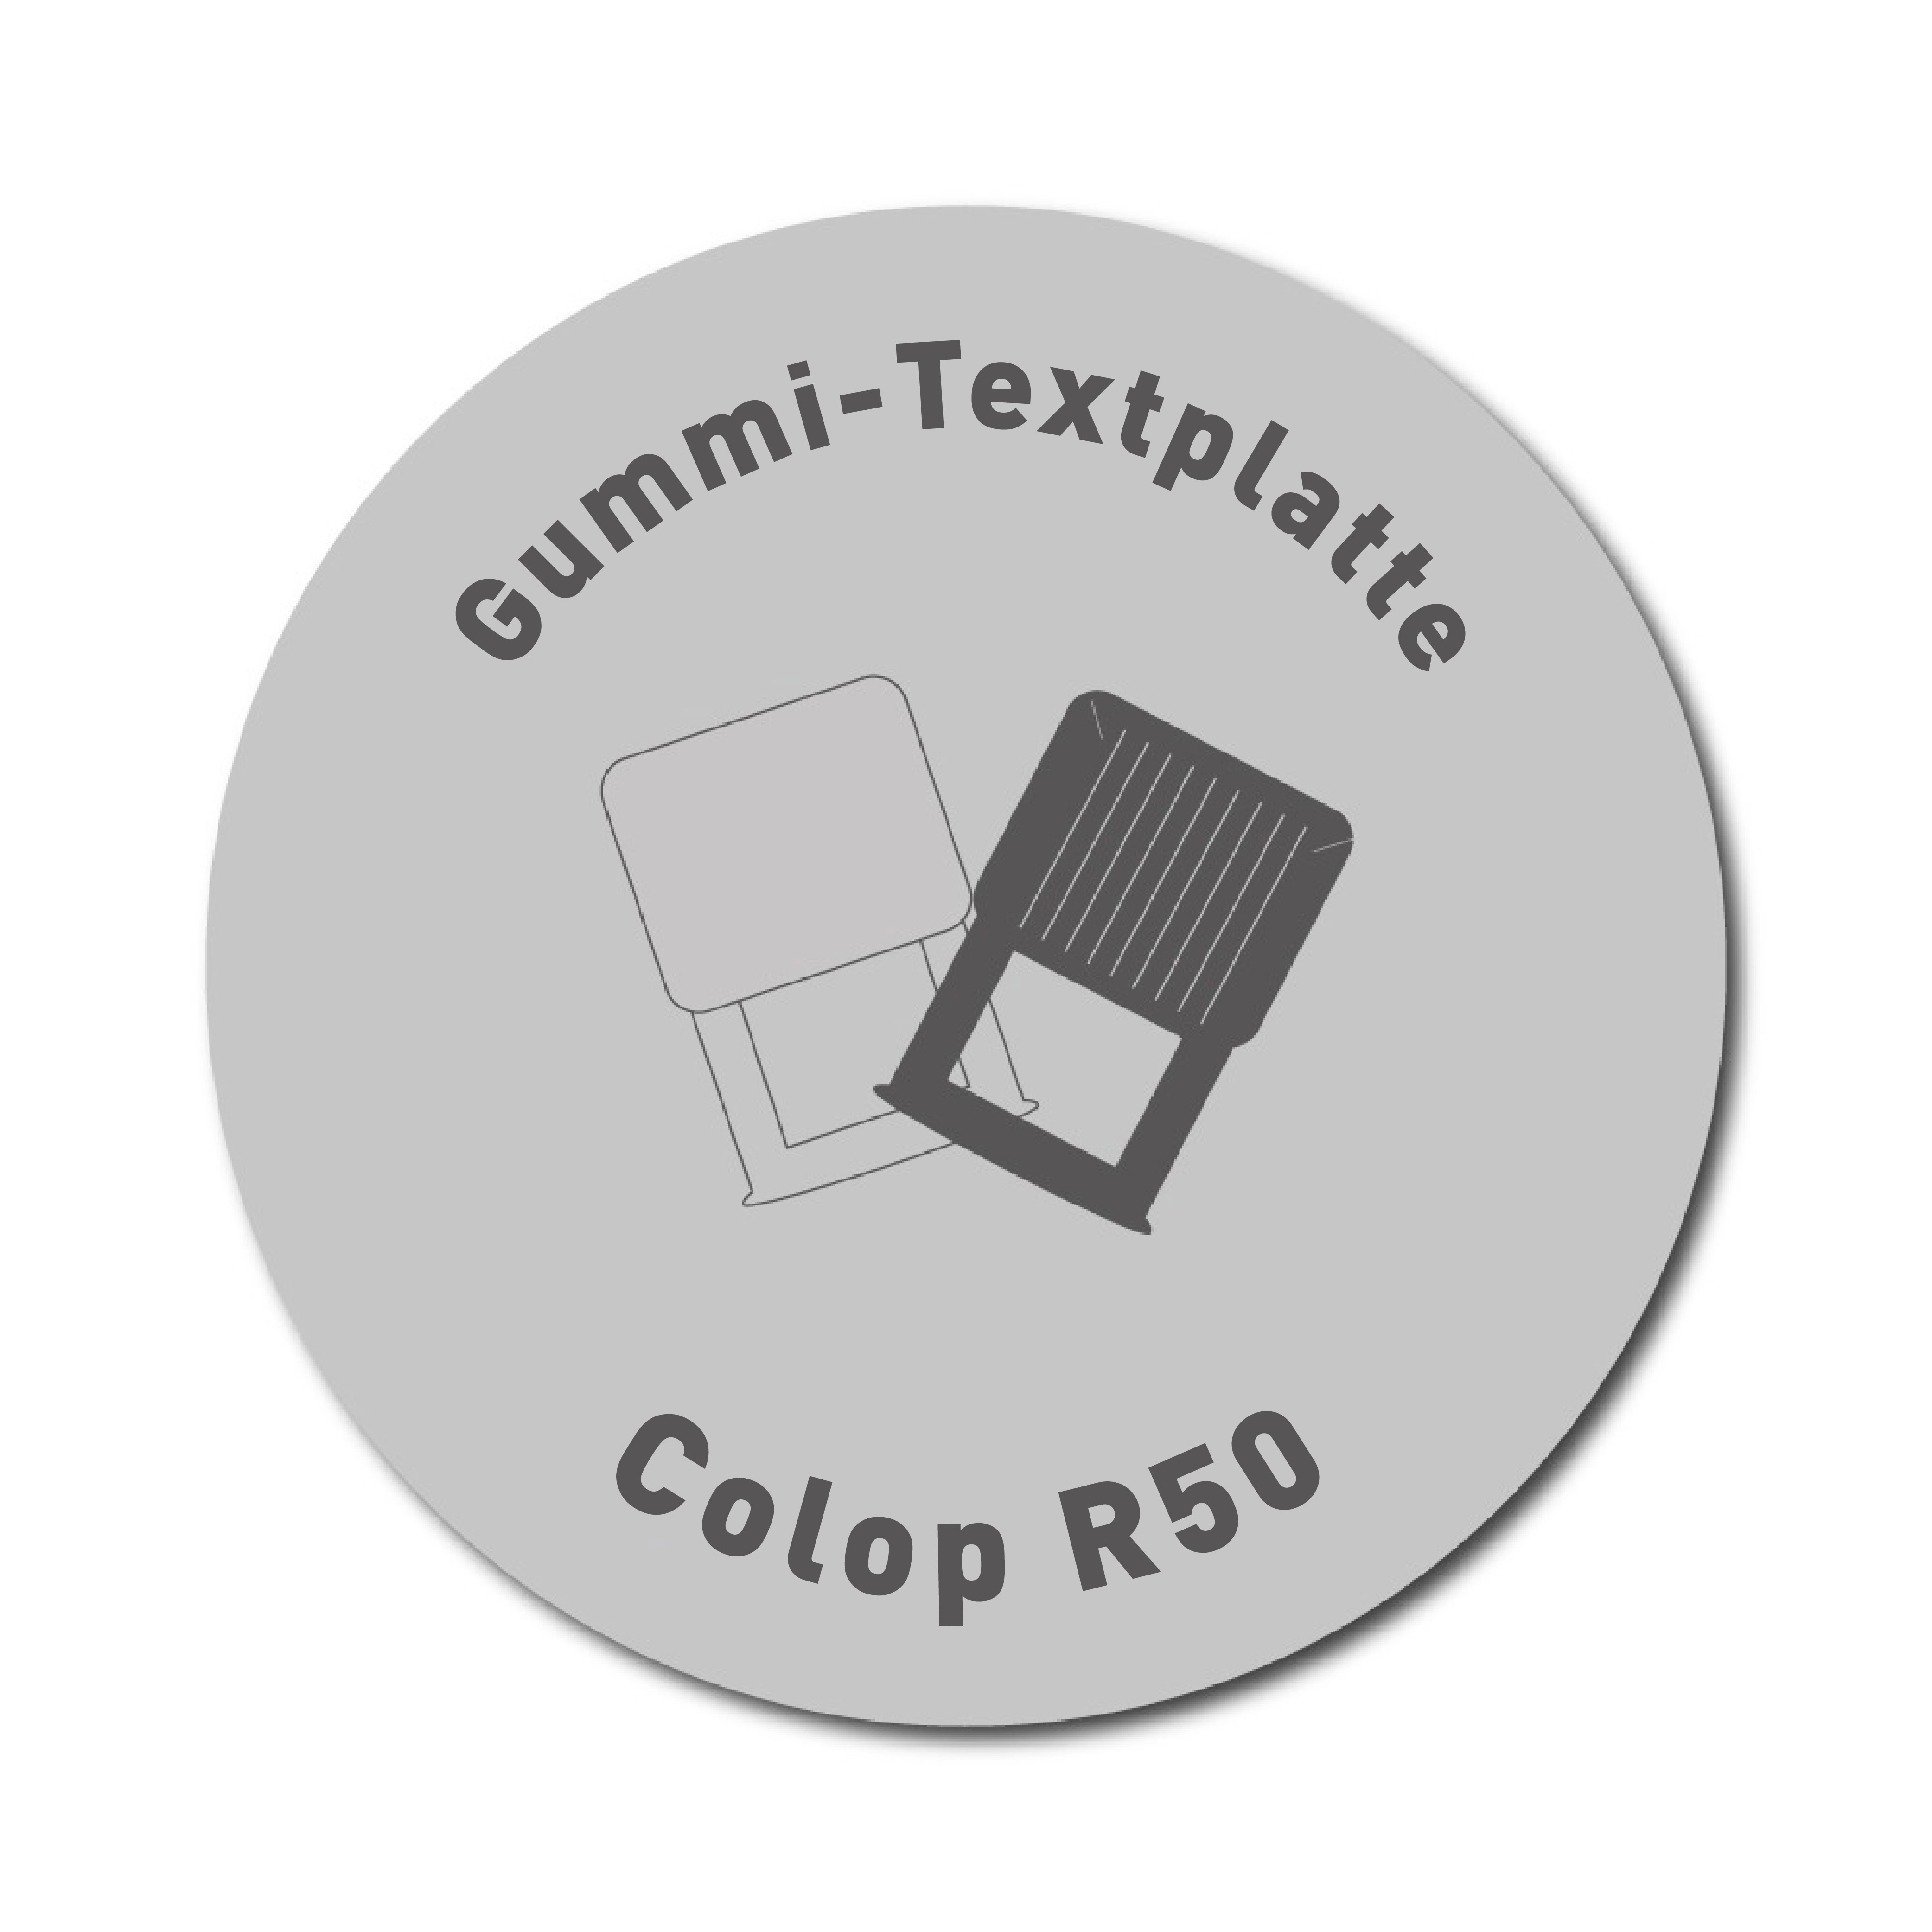 Textplatte Colop Printer R50